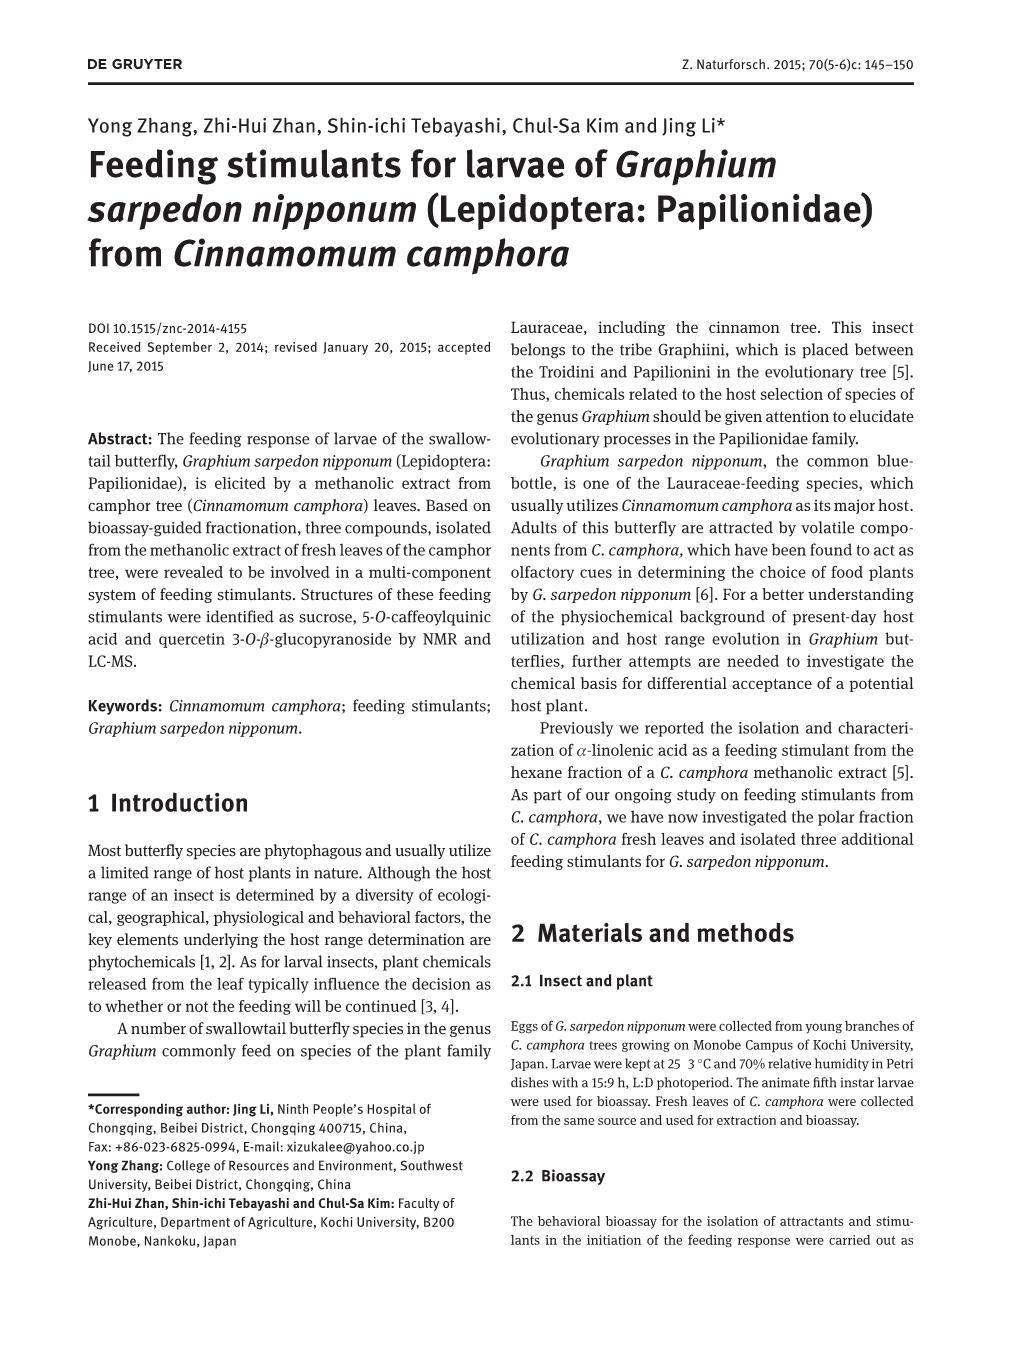 Feeding Stimulants for Larvae of Graphium Sarpedon Nipponum (Lepidoptera: Papilionidae) from Cinnamomum Camphora